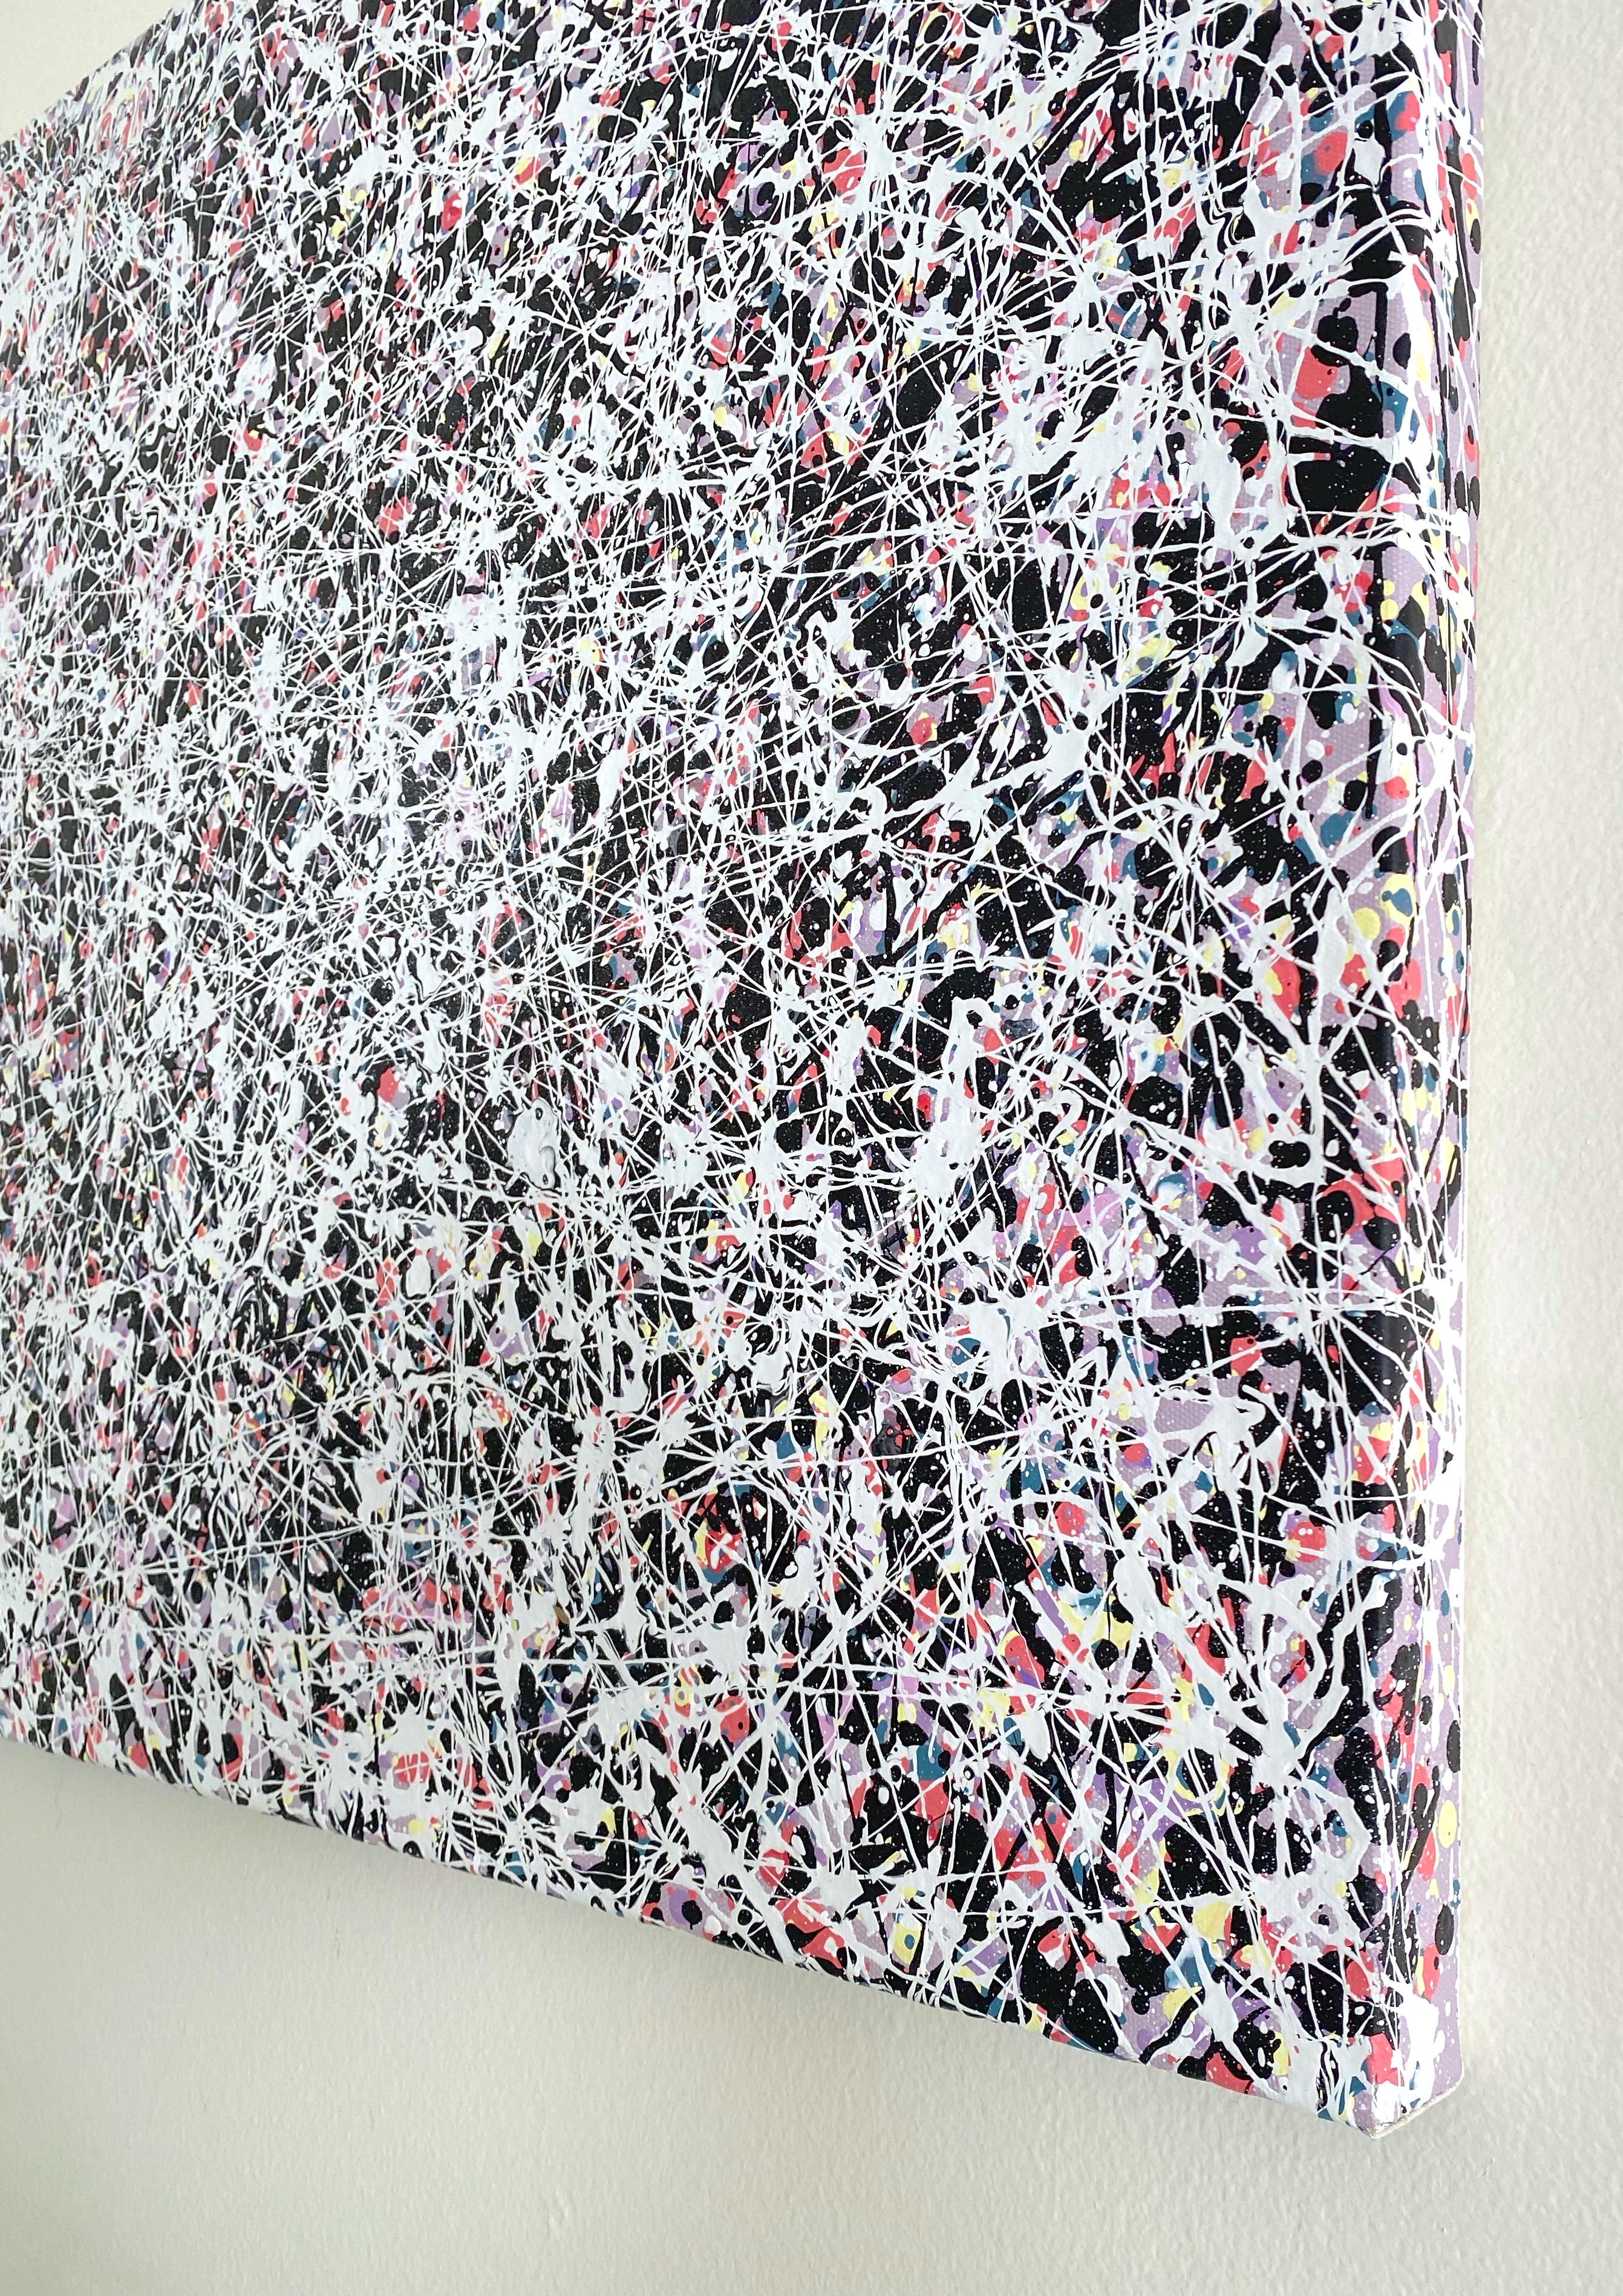 Artist: Mark Antoni
Work: Original Acrylic Painting, Handmade Artwork, One of a Kind 
Medium: Acrylic on Canvas 
Year: 2022
Style: Contemporary Art, 
Subject: Black and White,
Size: 25